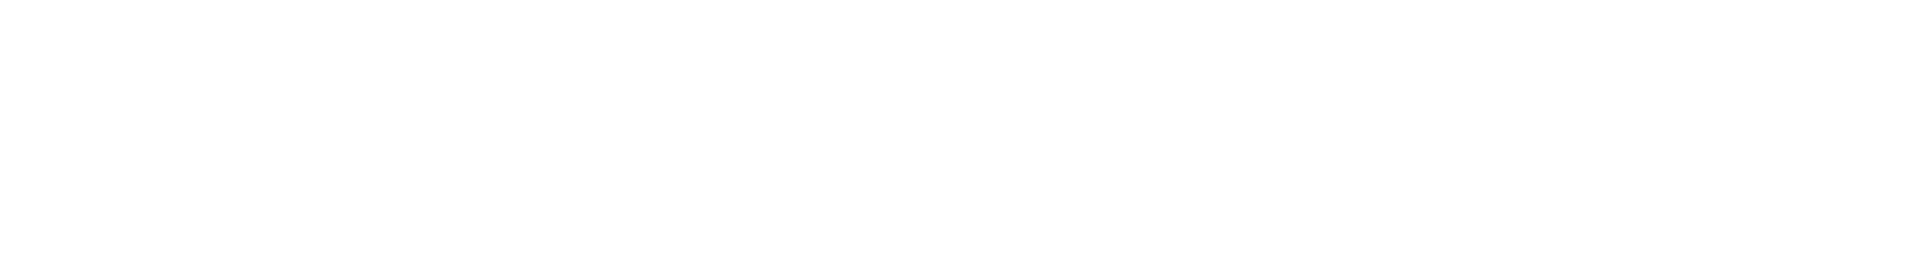 White Banner Curve